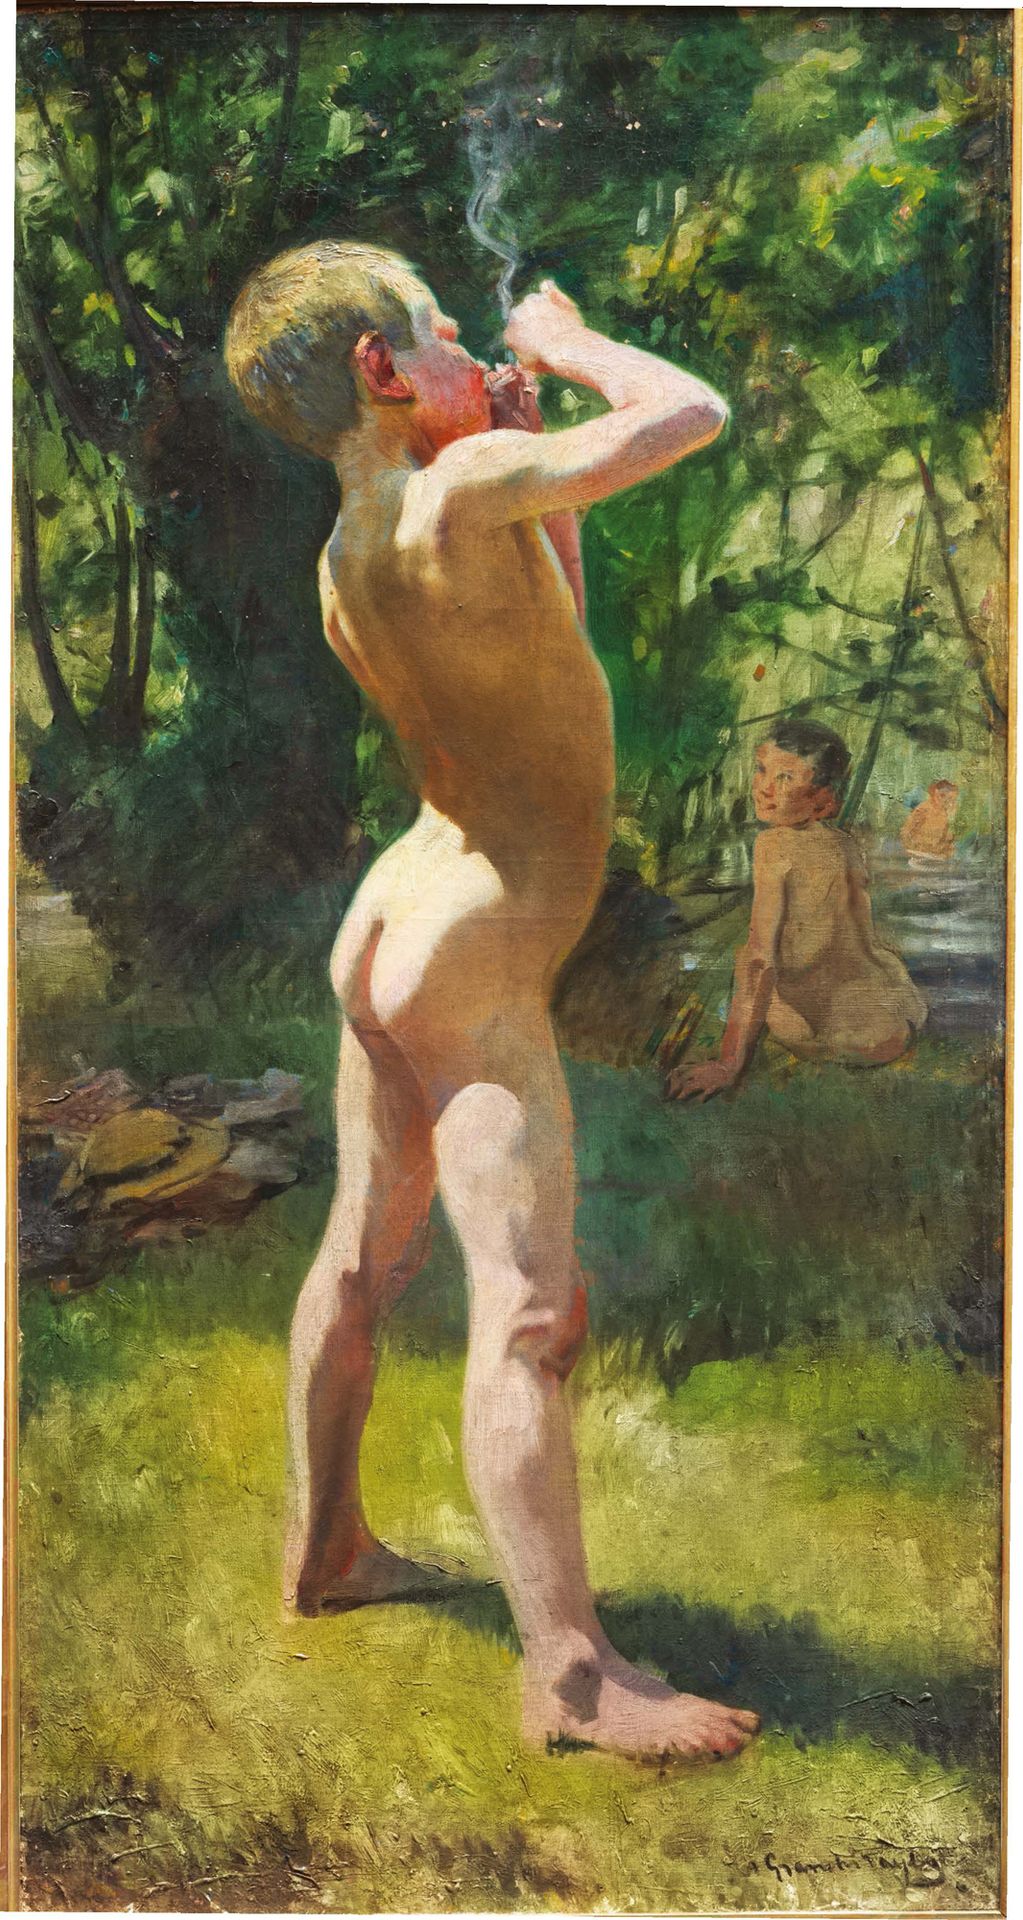 Achille Granchi-Taylor (1857-1921) The Child with a Cigarette, 1887
Oil on canva&hellip;